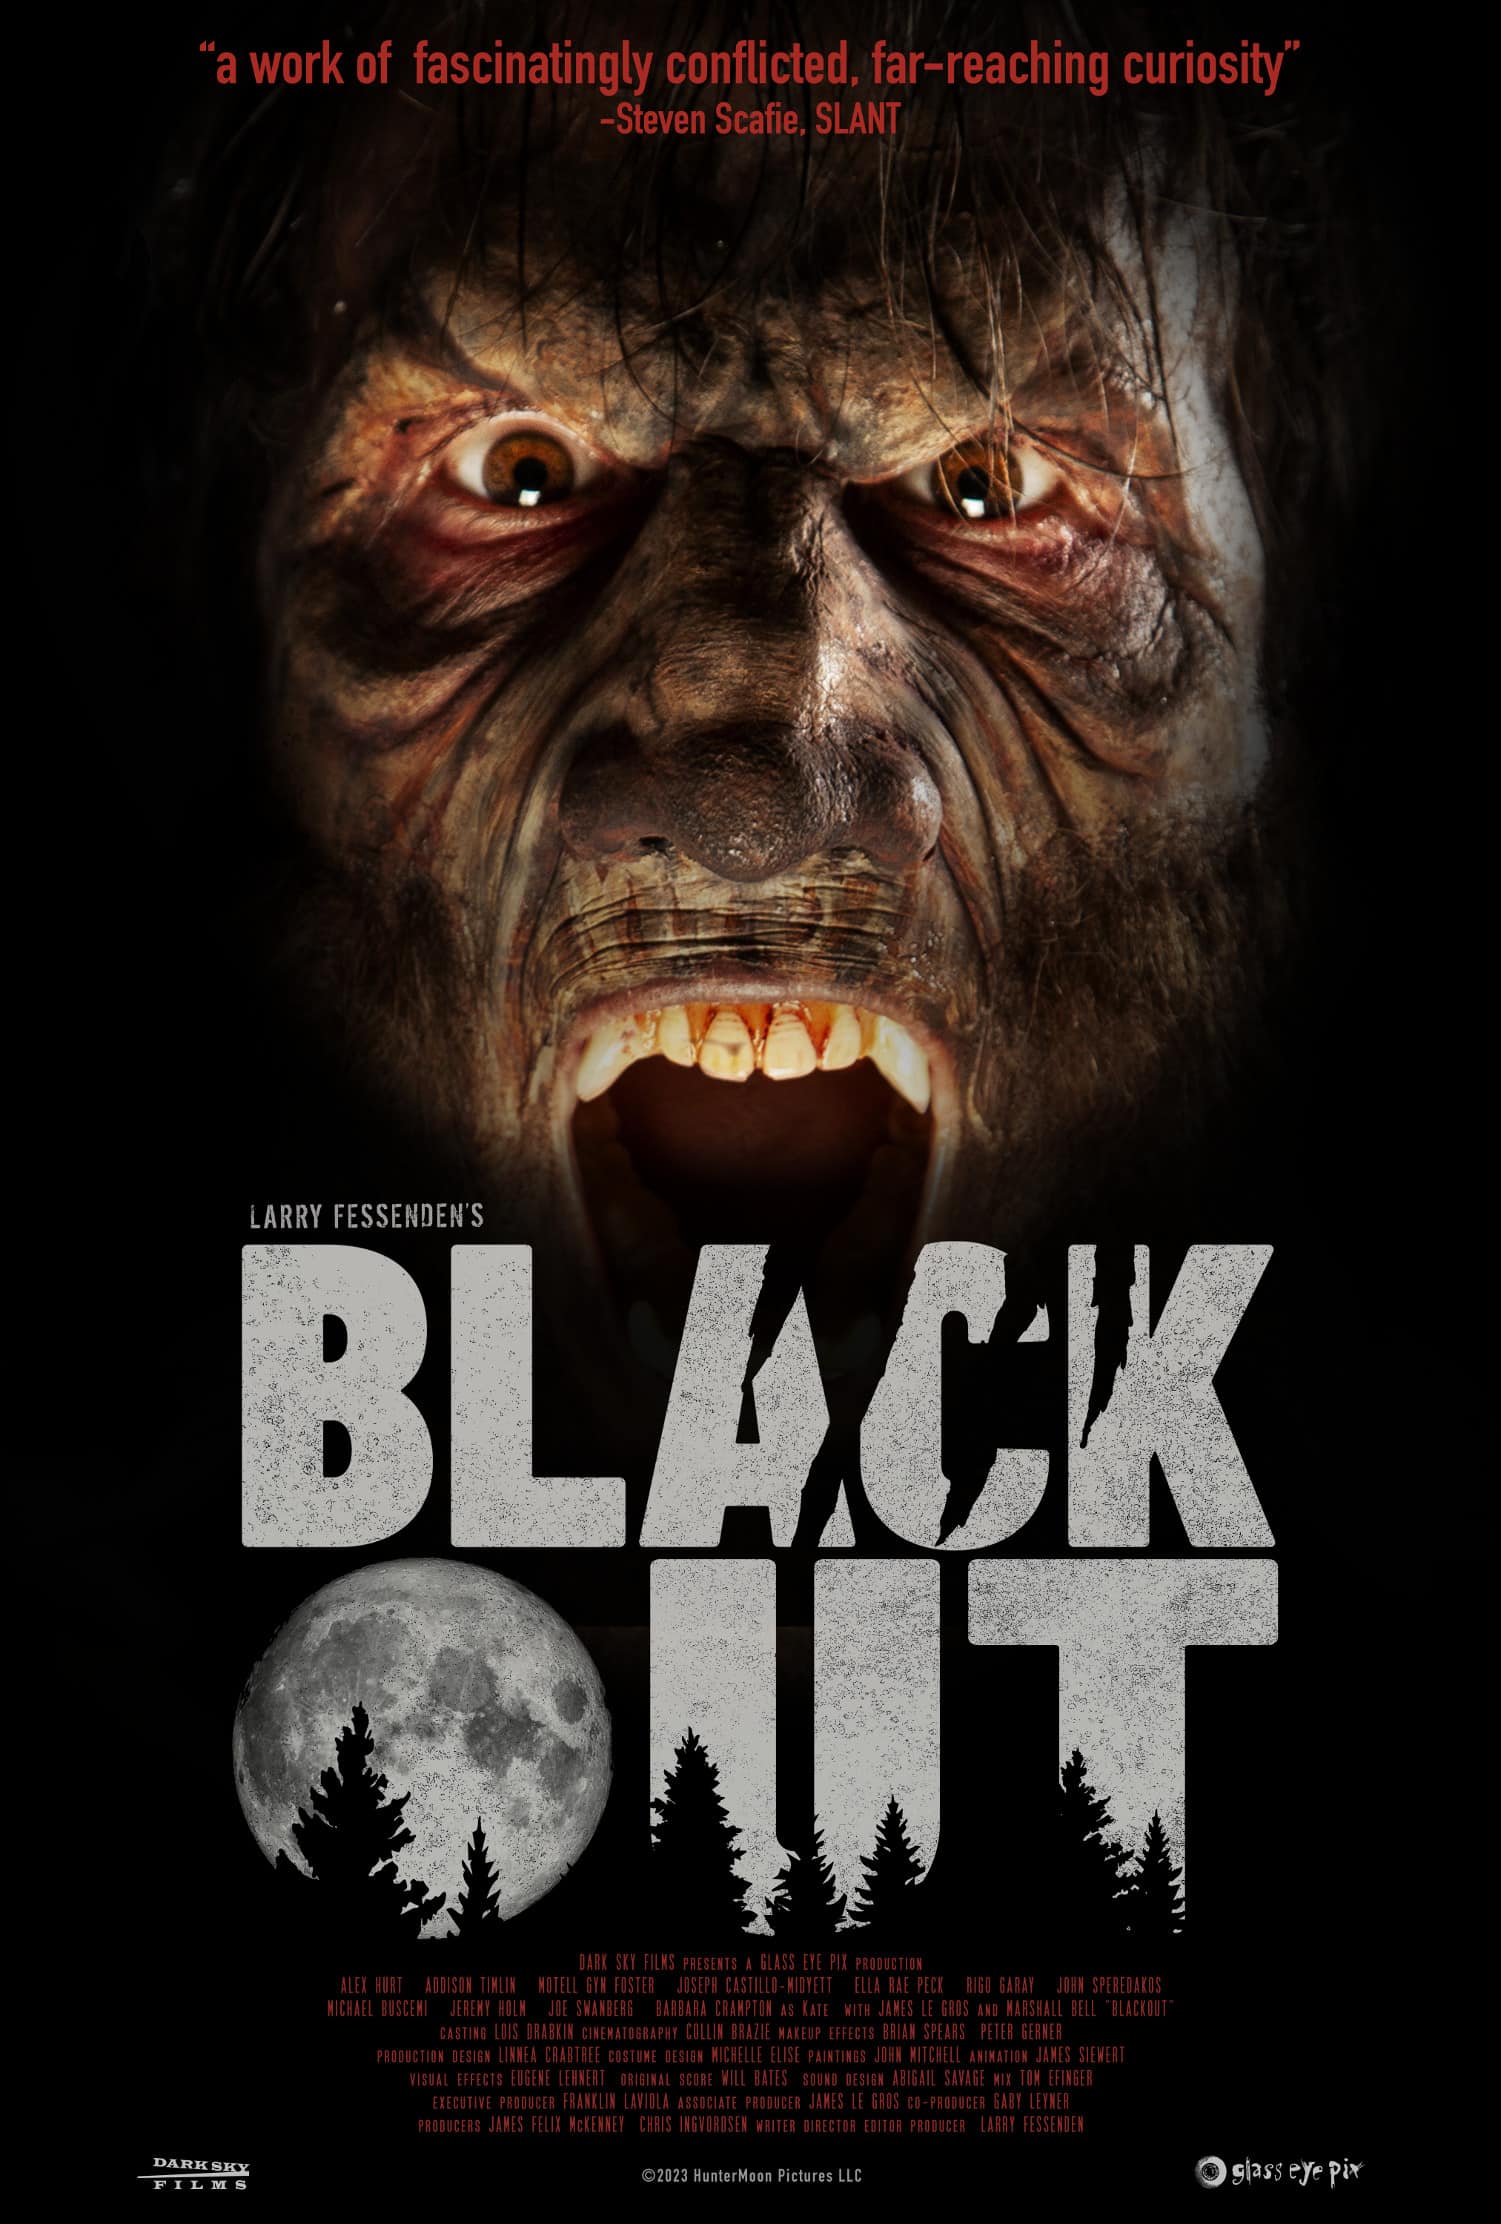 Blackout trailer: Larry Fessenden werewolf movie is heading to one theatre and VOD